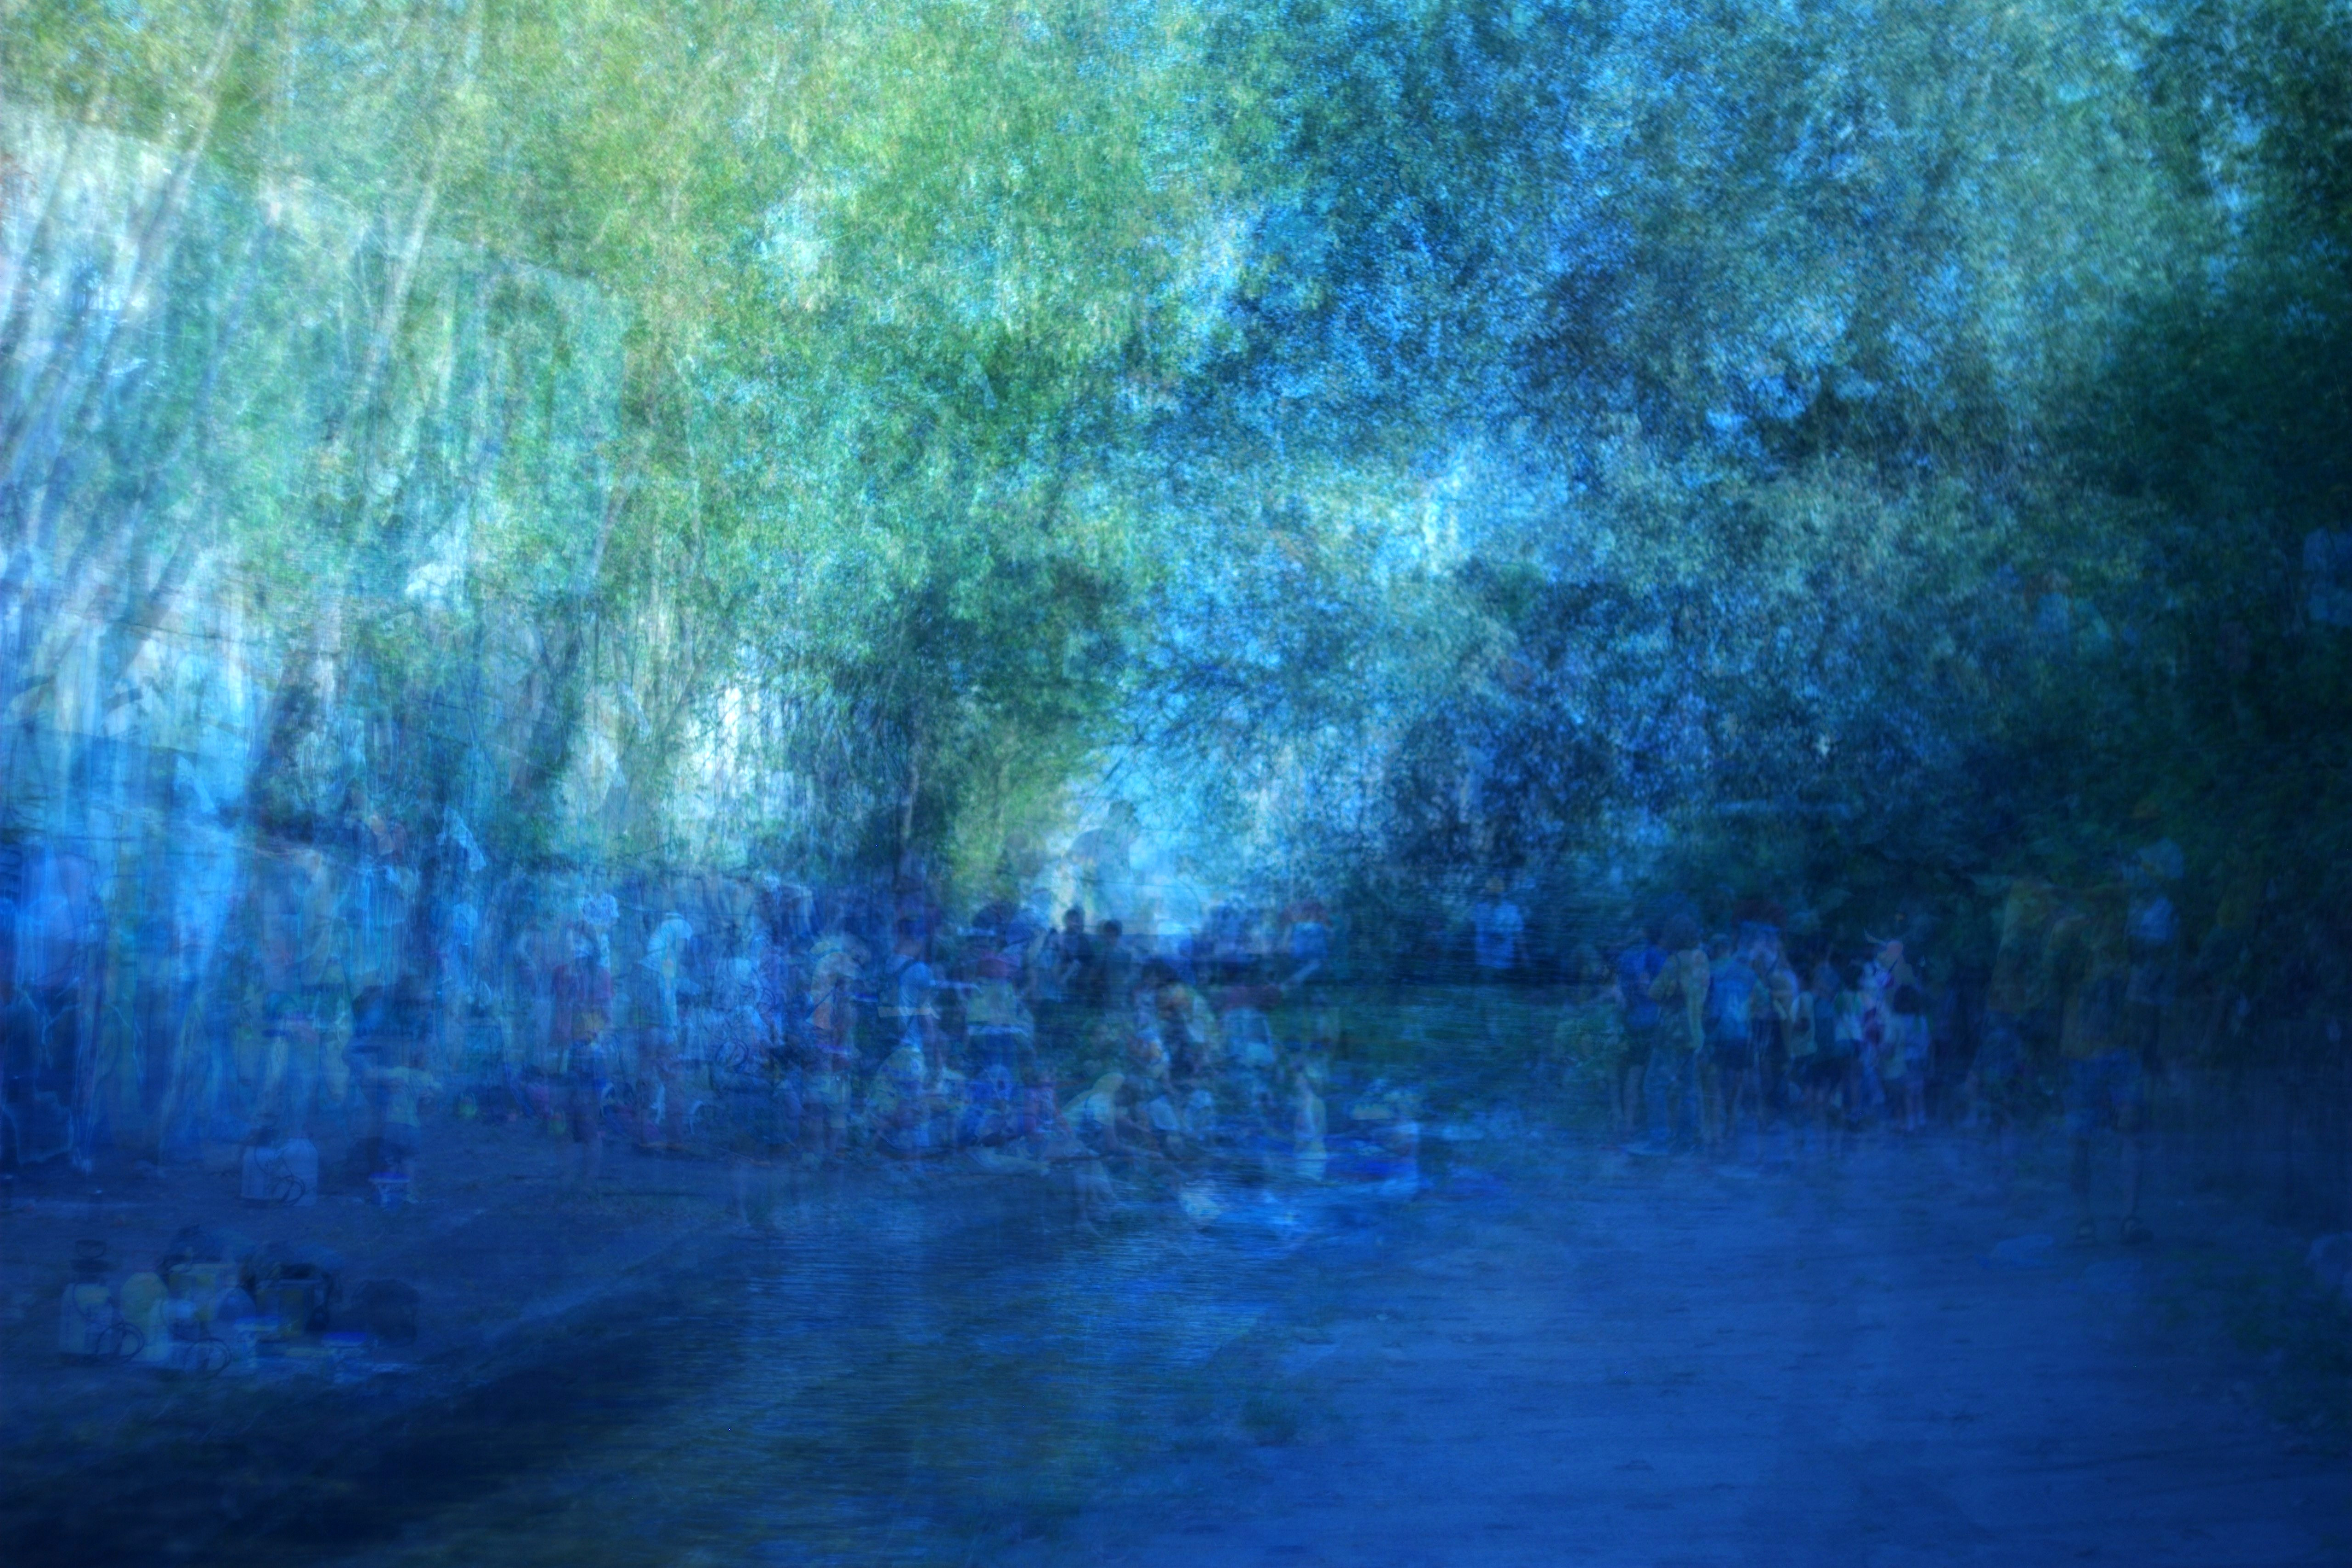 Goodbye Summer (On Lybid River). Electronic artwork by Hvrenja